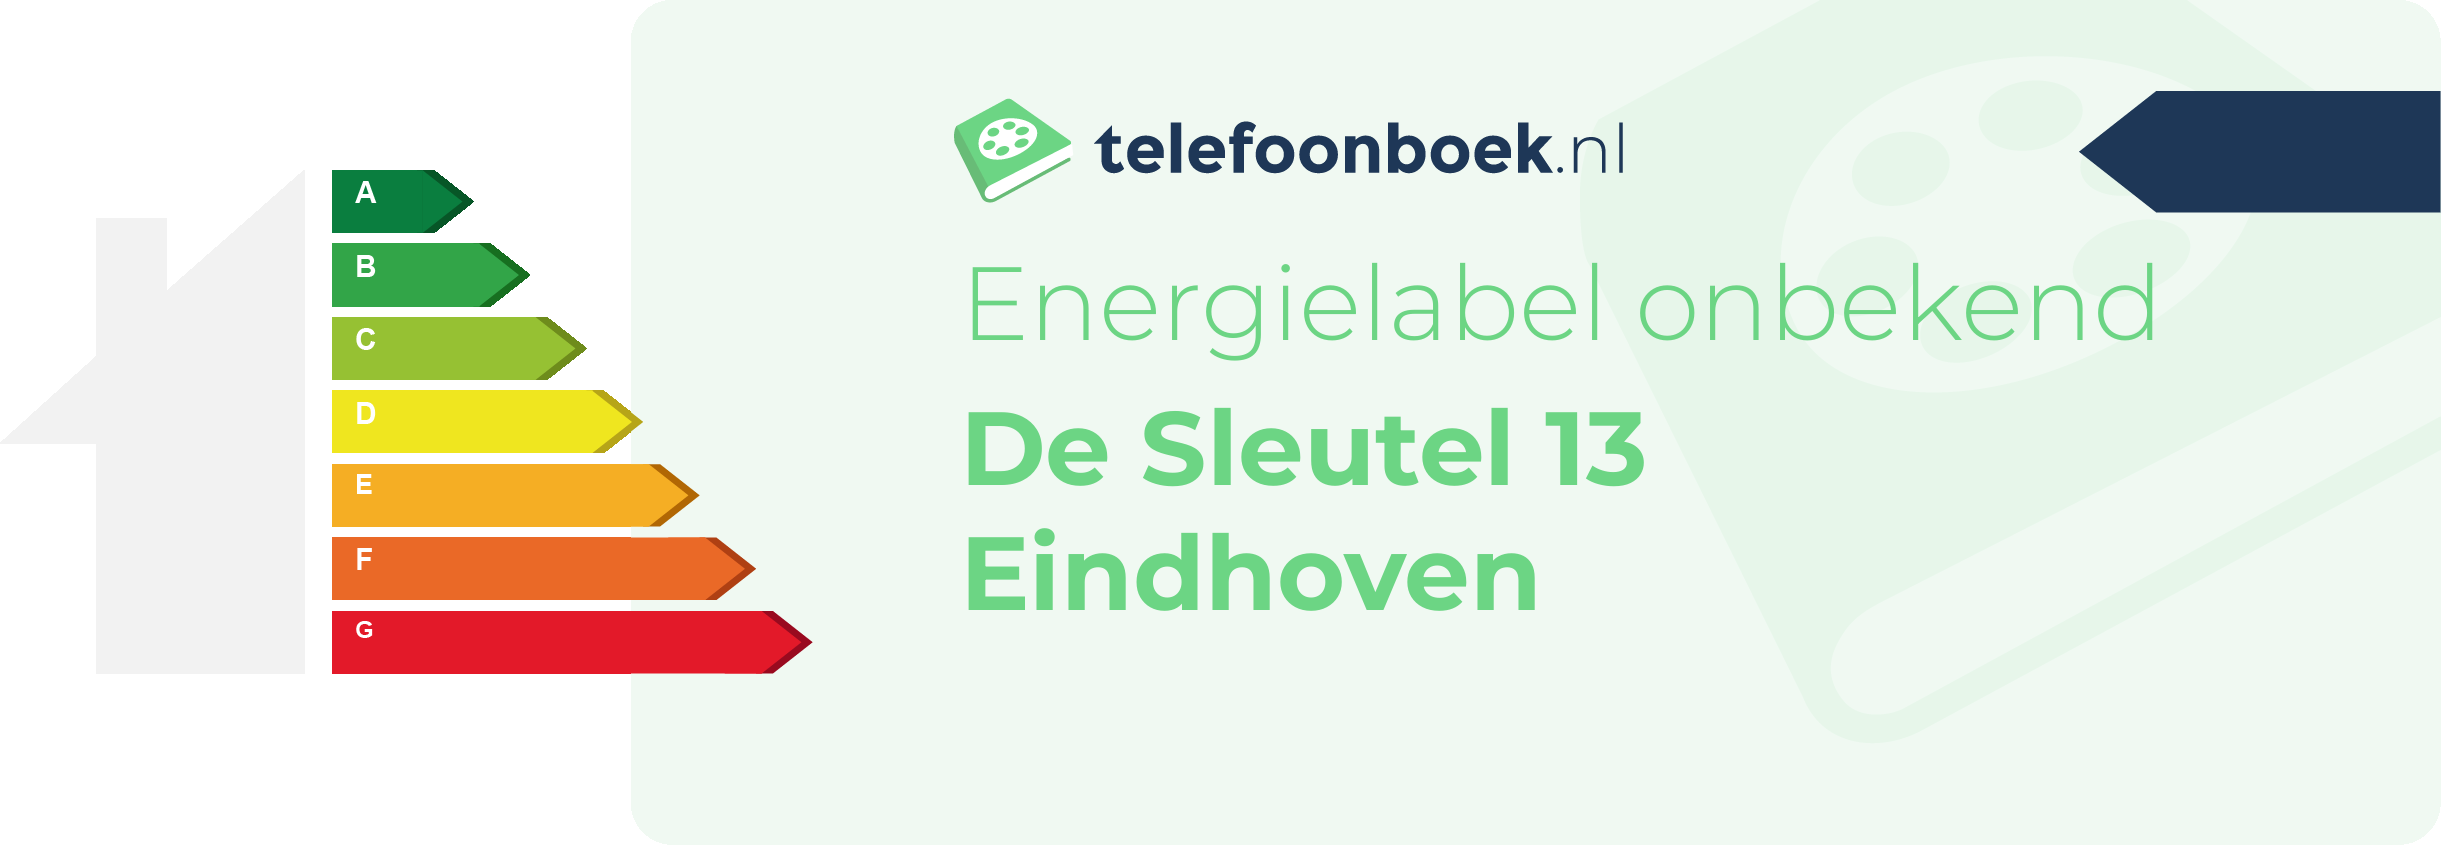 Energielabel De Sleutel 13 Eindhoven